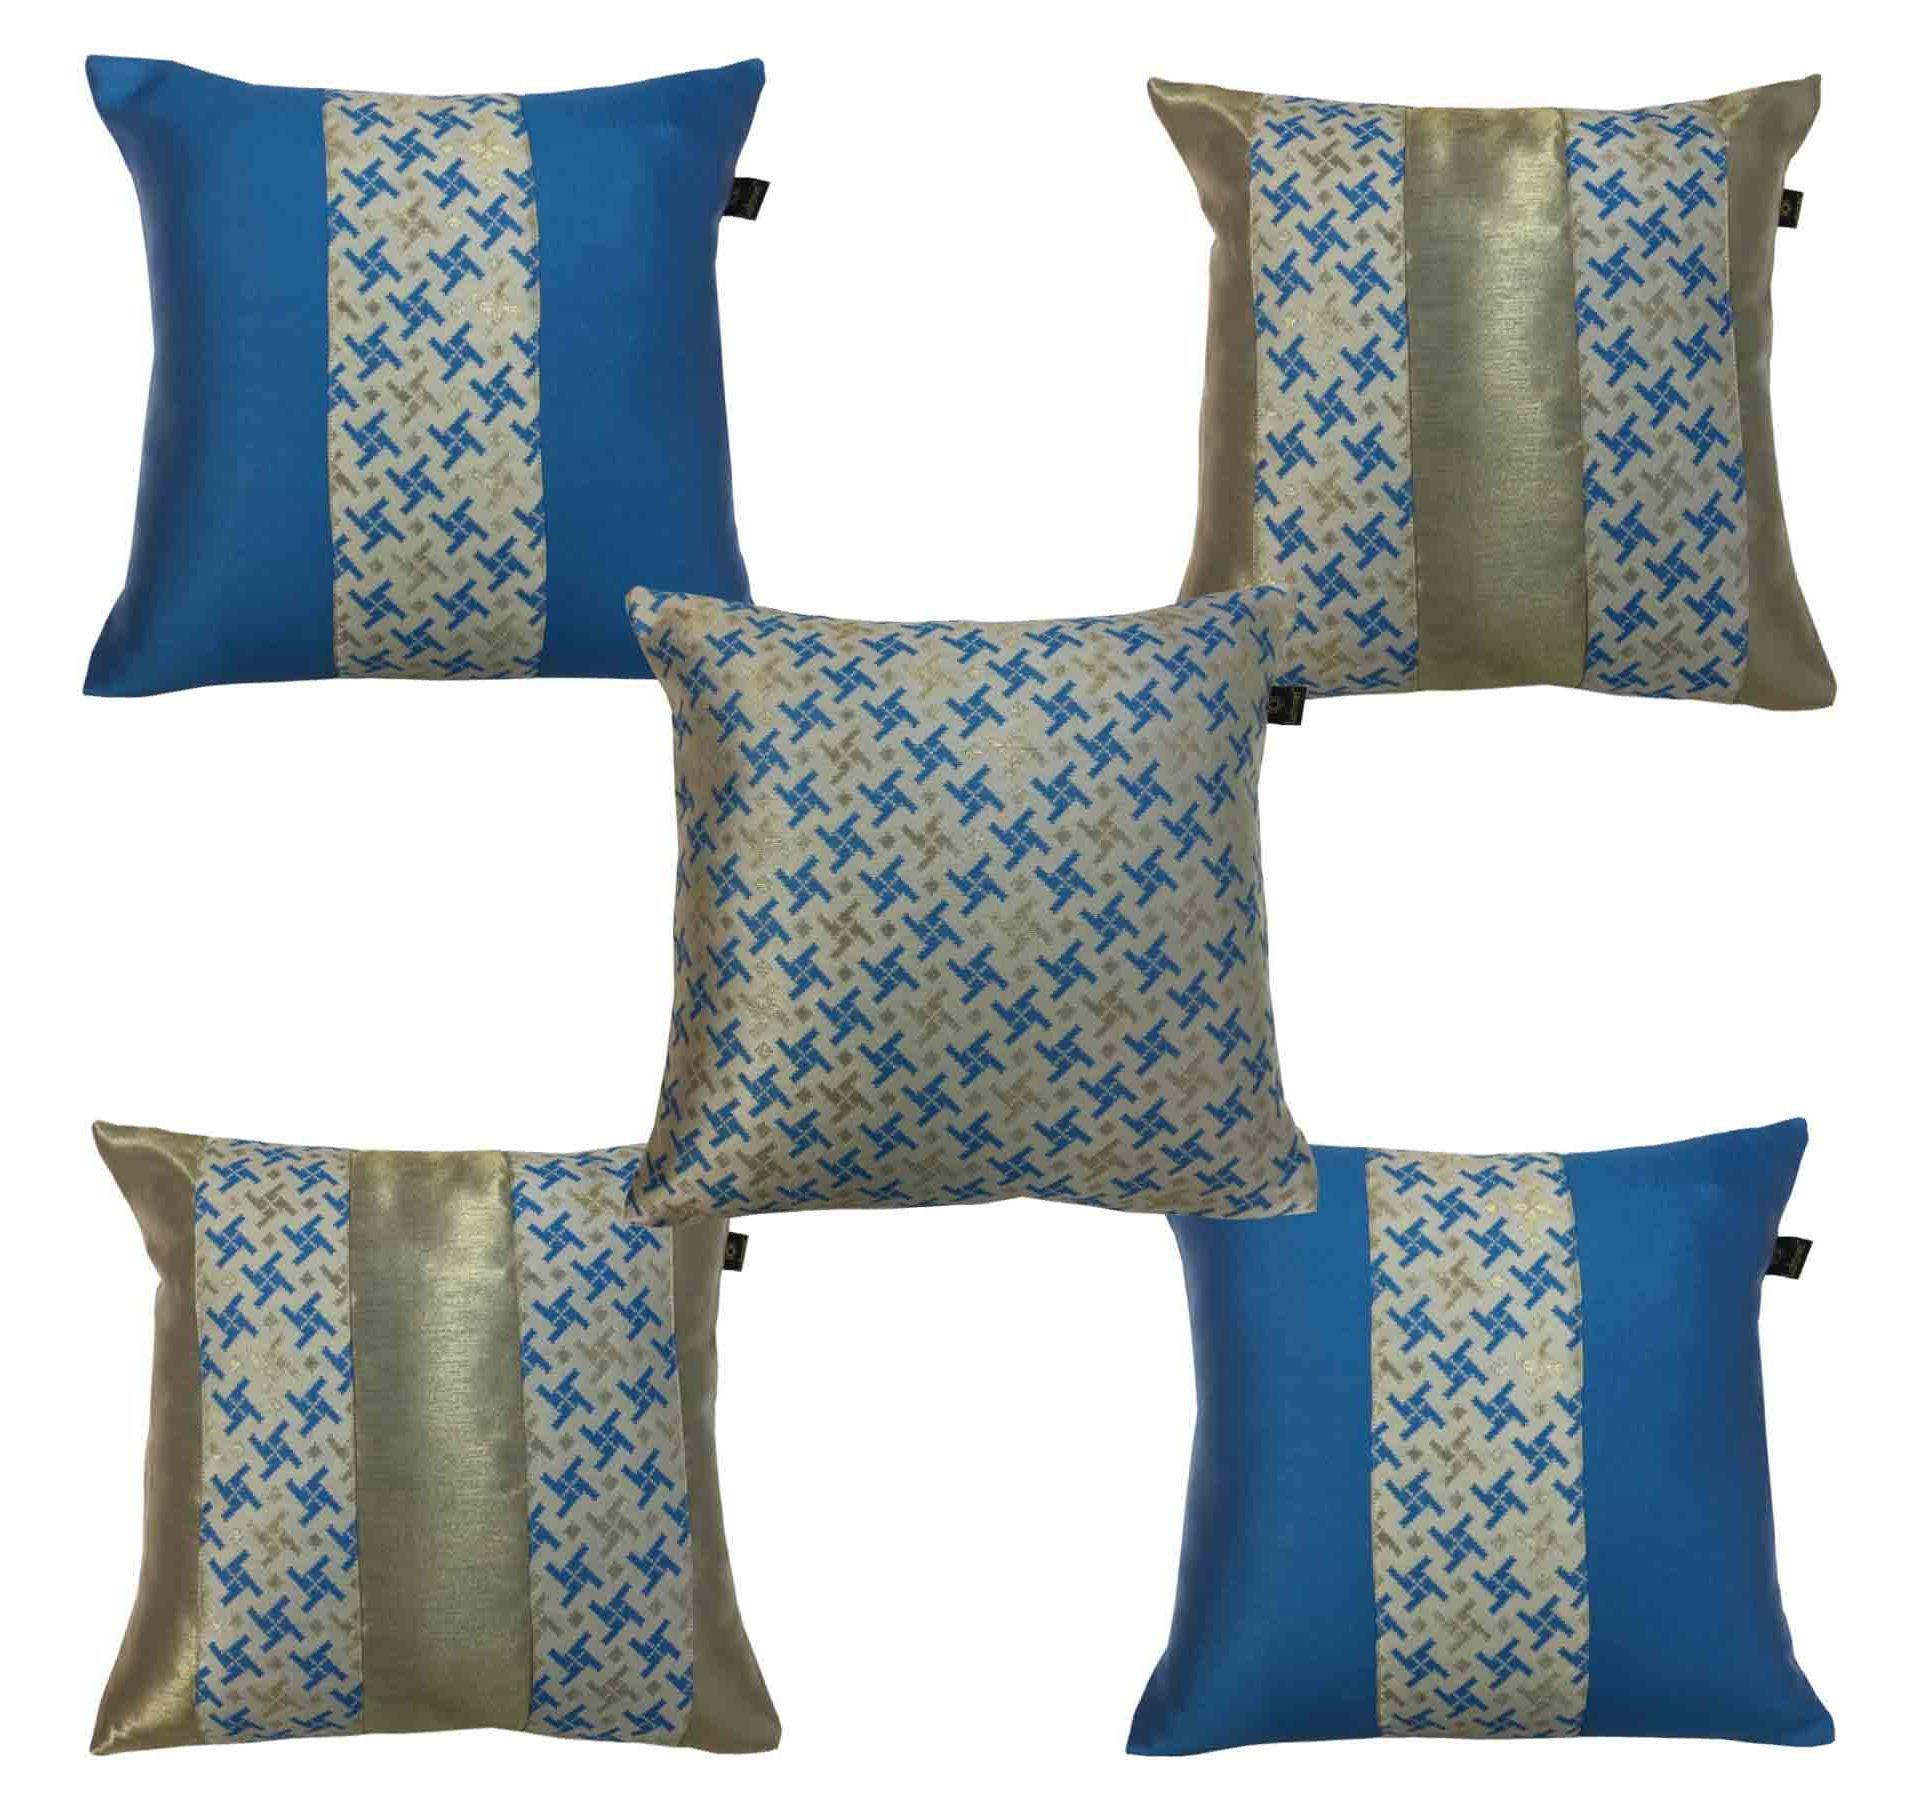 Lushomes Jacquard Campanula Design 2 Cushion Cover set for any celebration.(Pack of 5, 40 x 40 cms) - Lushomes